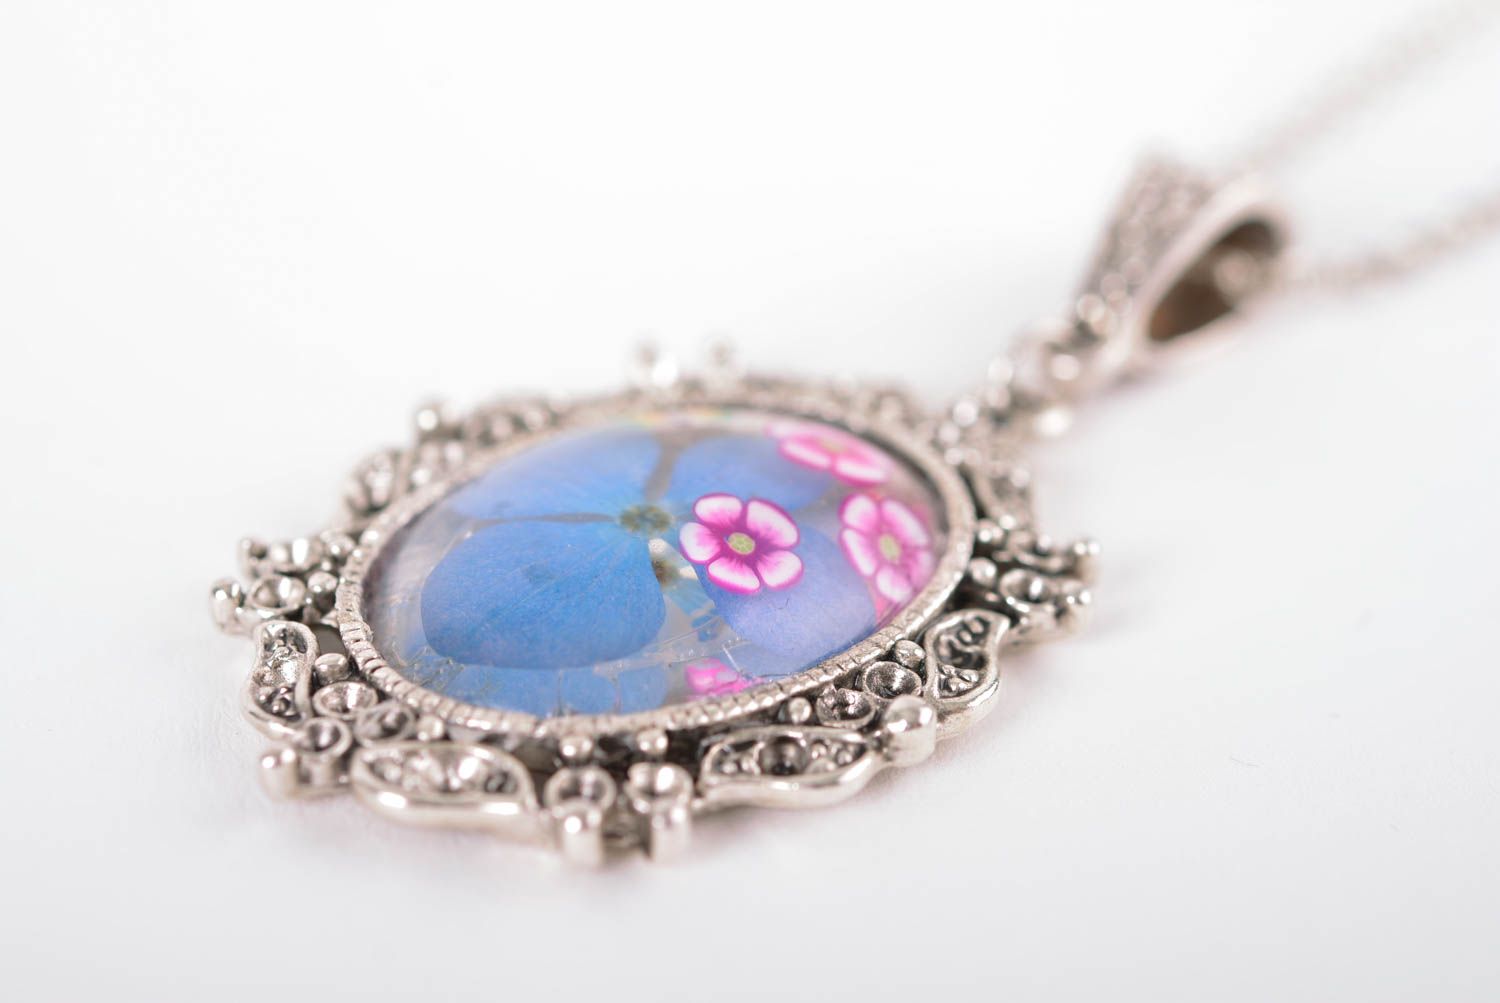 Unusual handmade neck pendant flower pendant botanical jewelry designs photo 5